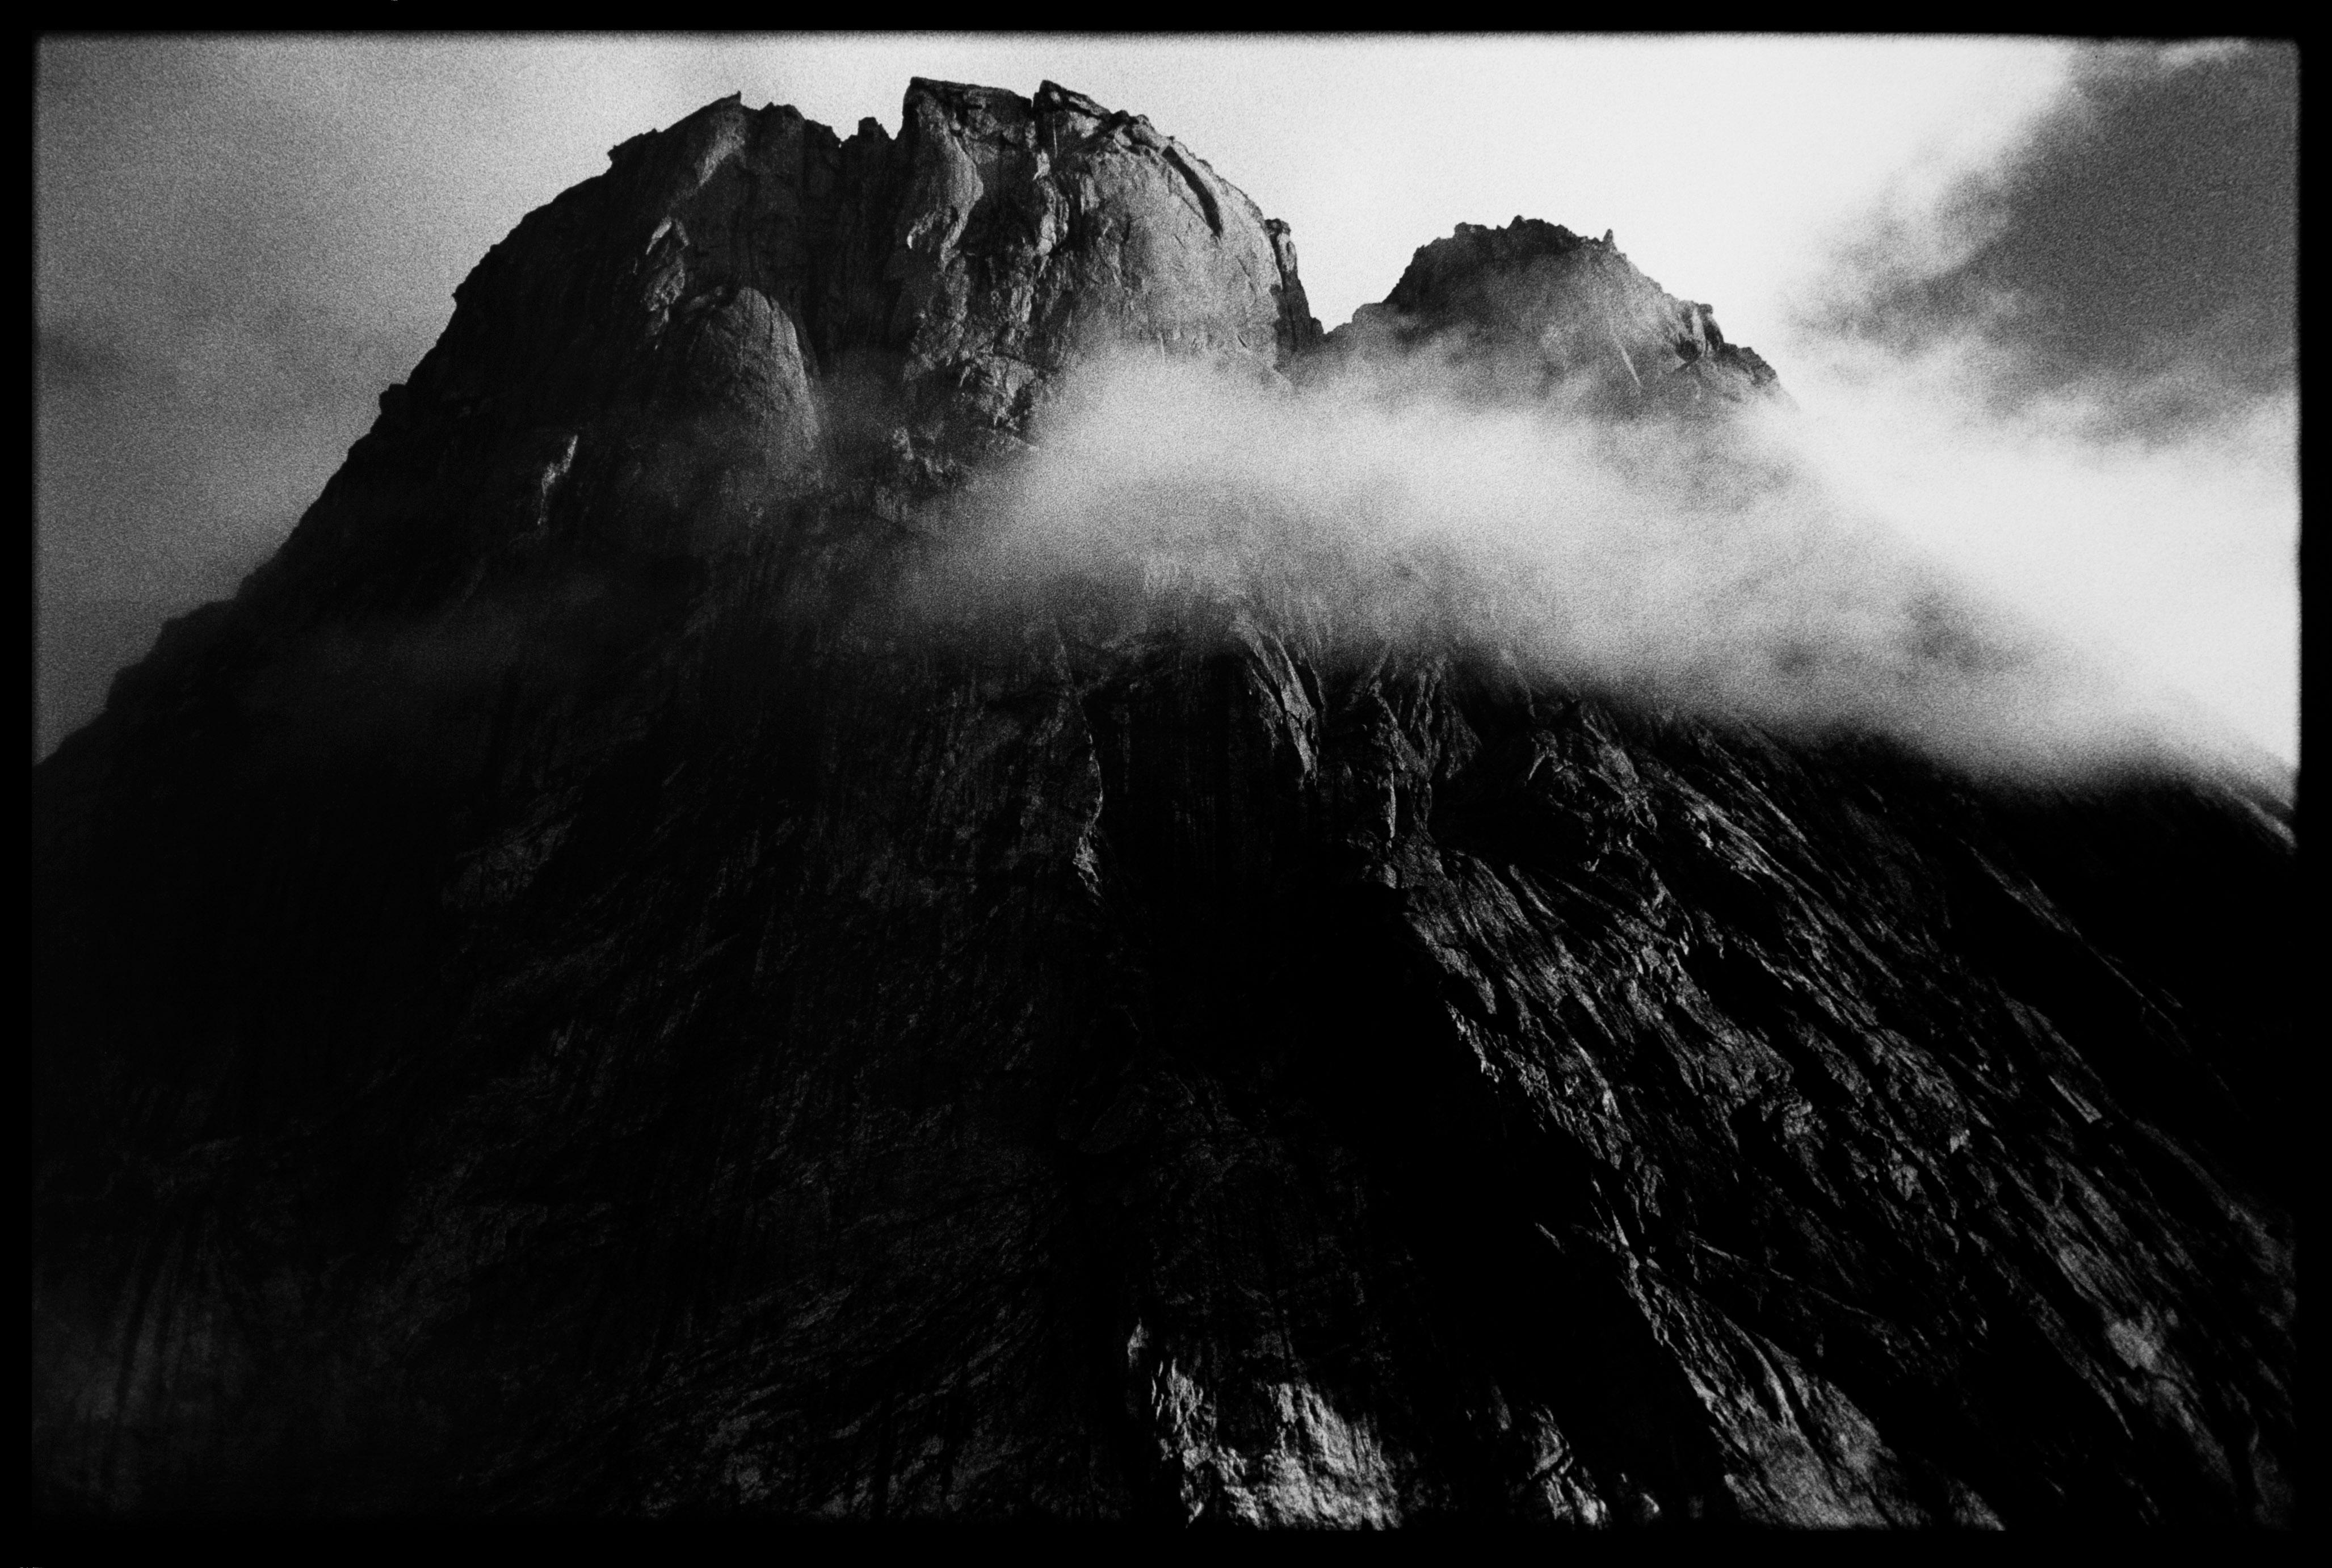 Benjamin Ruffieux Landscape Photograph - Mountain (Greenland) - analogue landscape photography